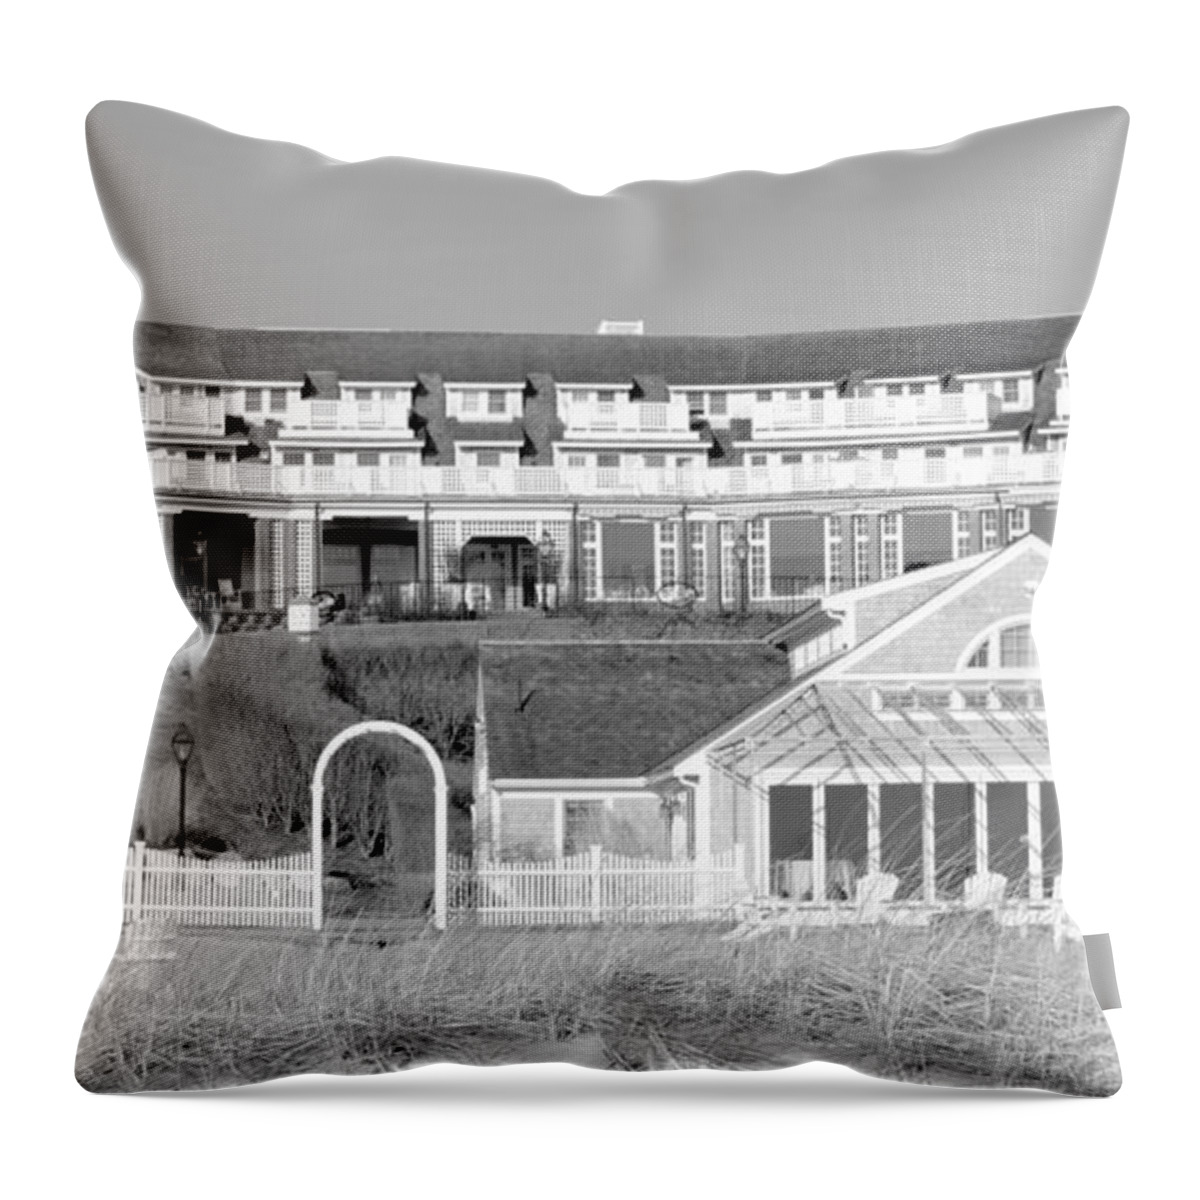 Massachusetts Throw Pillow featuring the photograph Chatham Bars Inn B and W by Caroline Stella